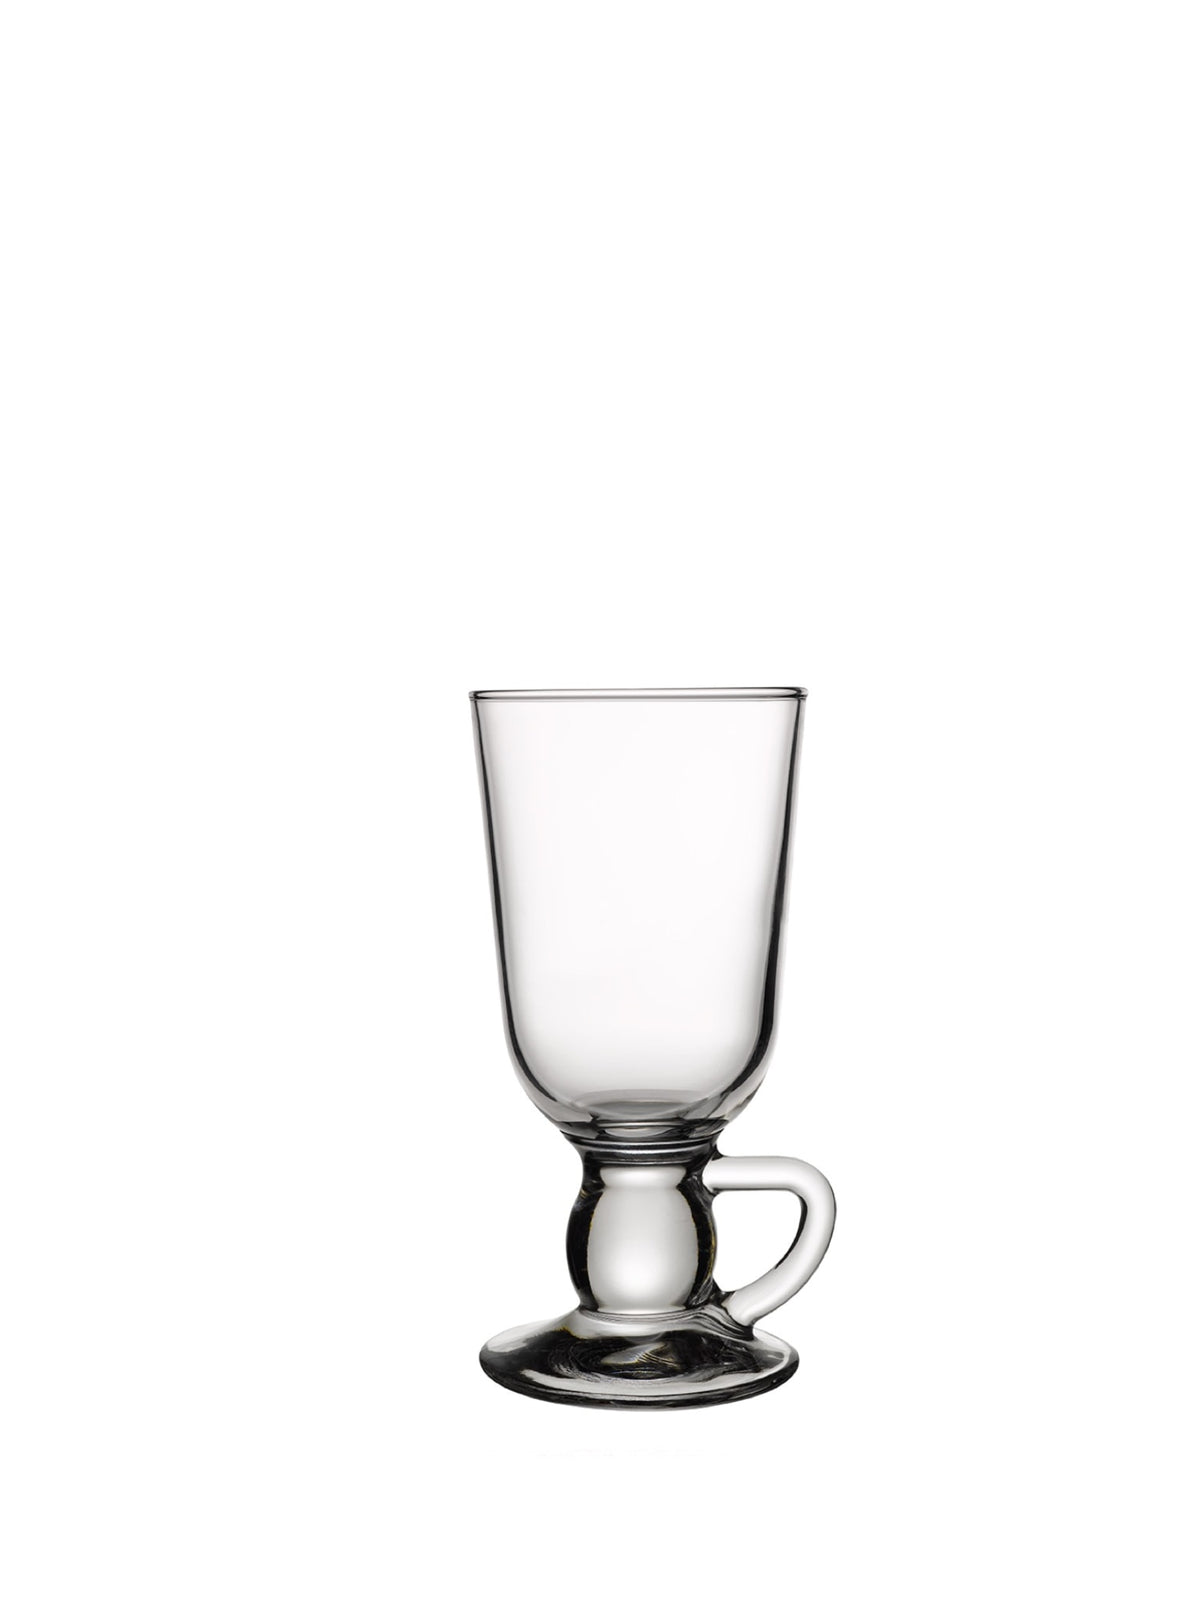 Colombian Irish Coffee glas - Elegant glas til servering af varme drikke som Irish Coffee.